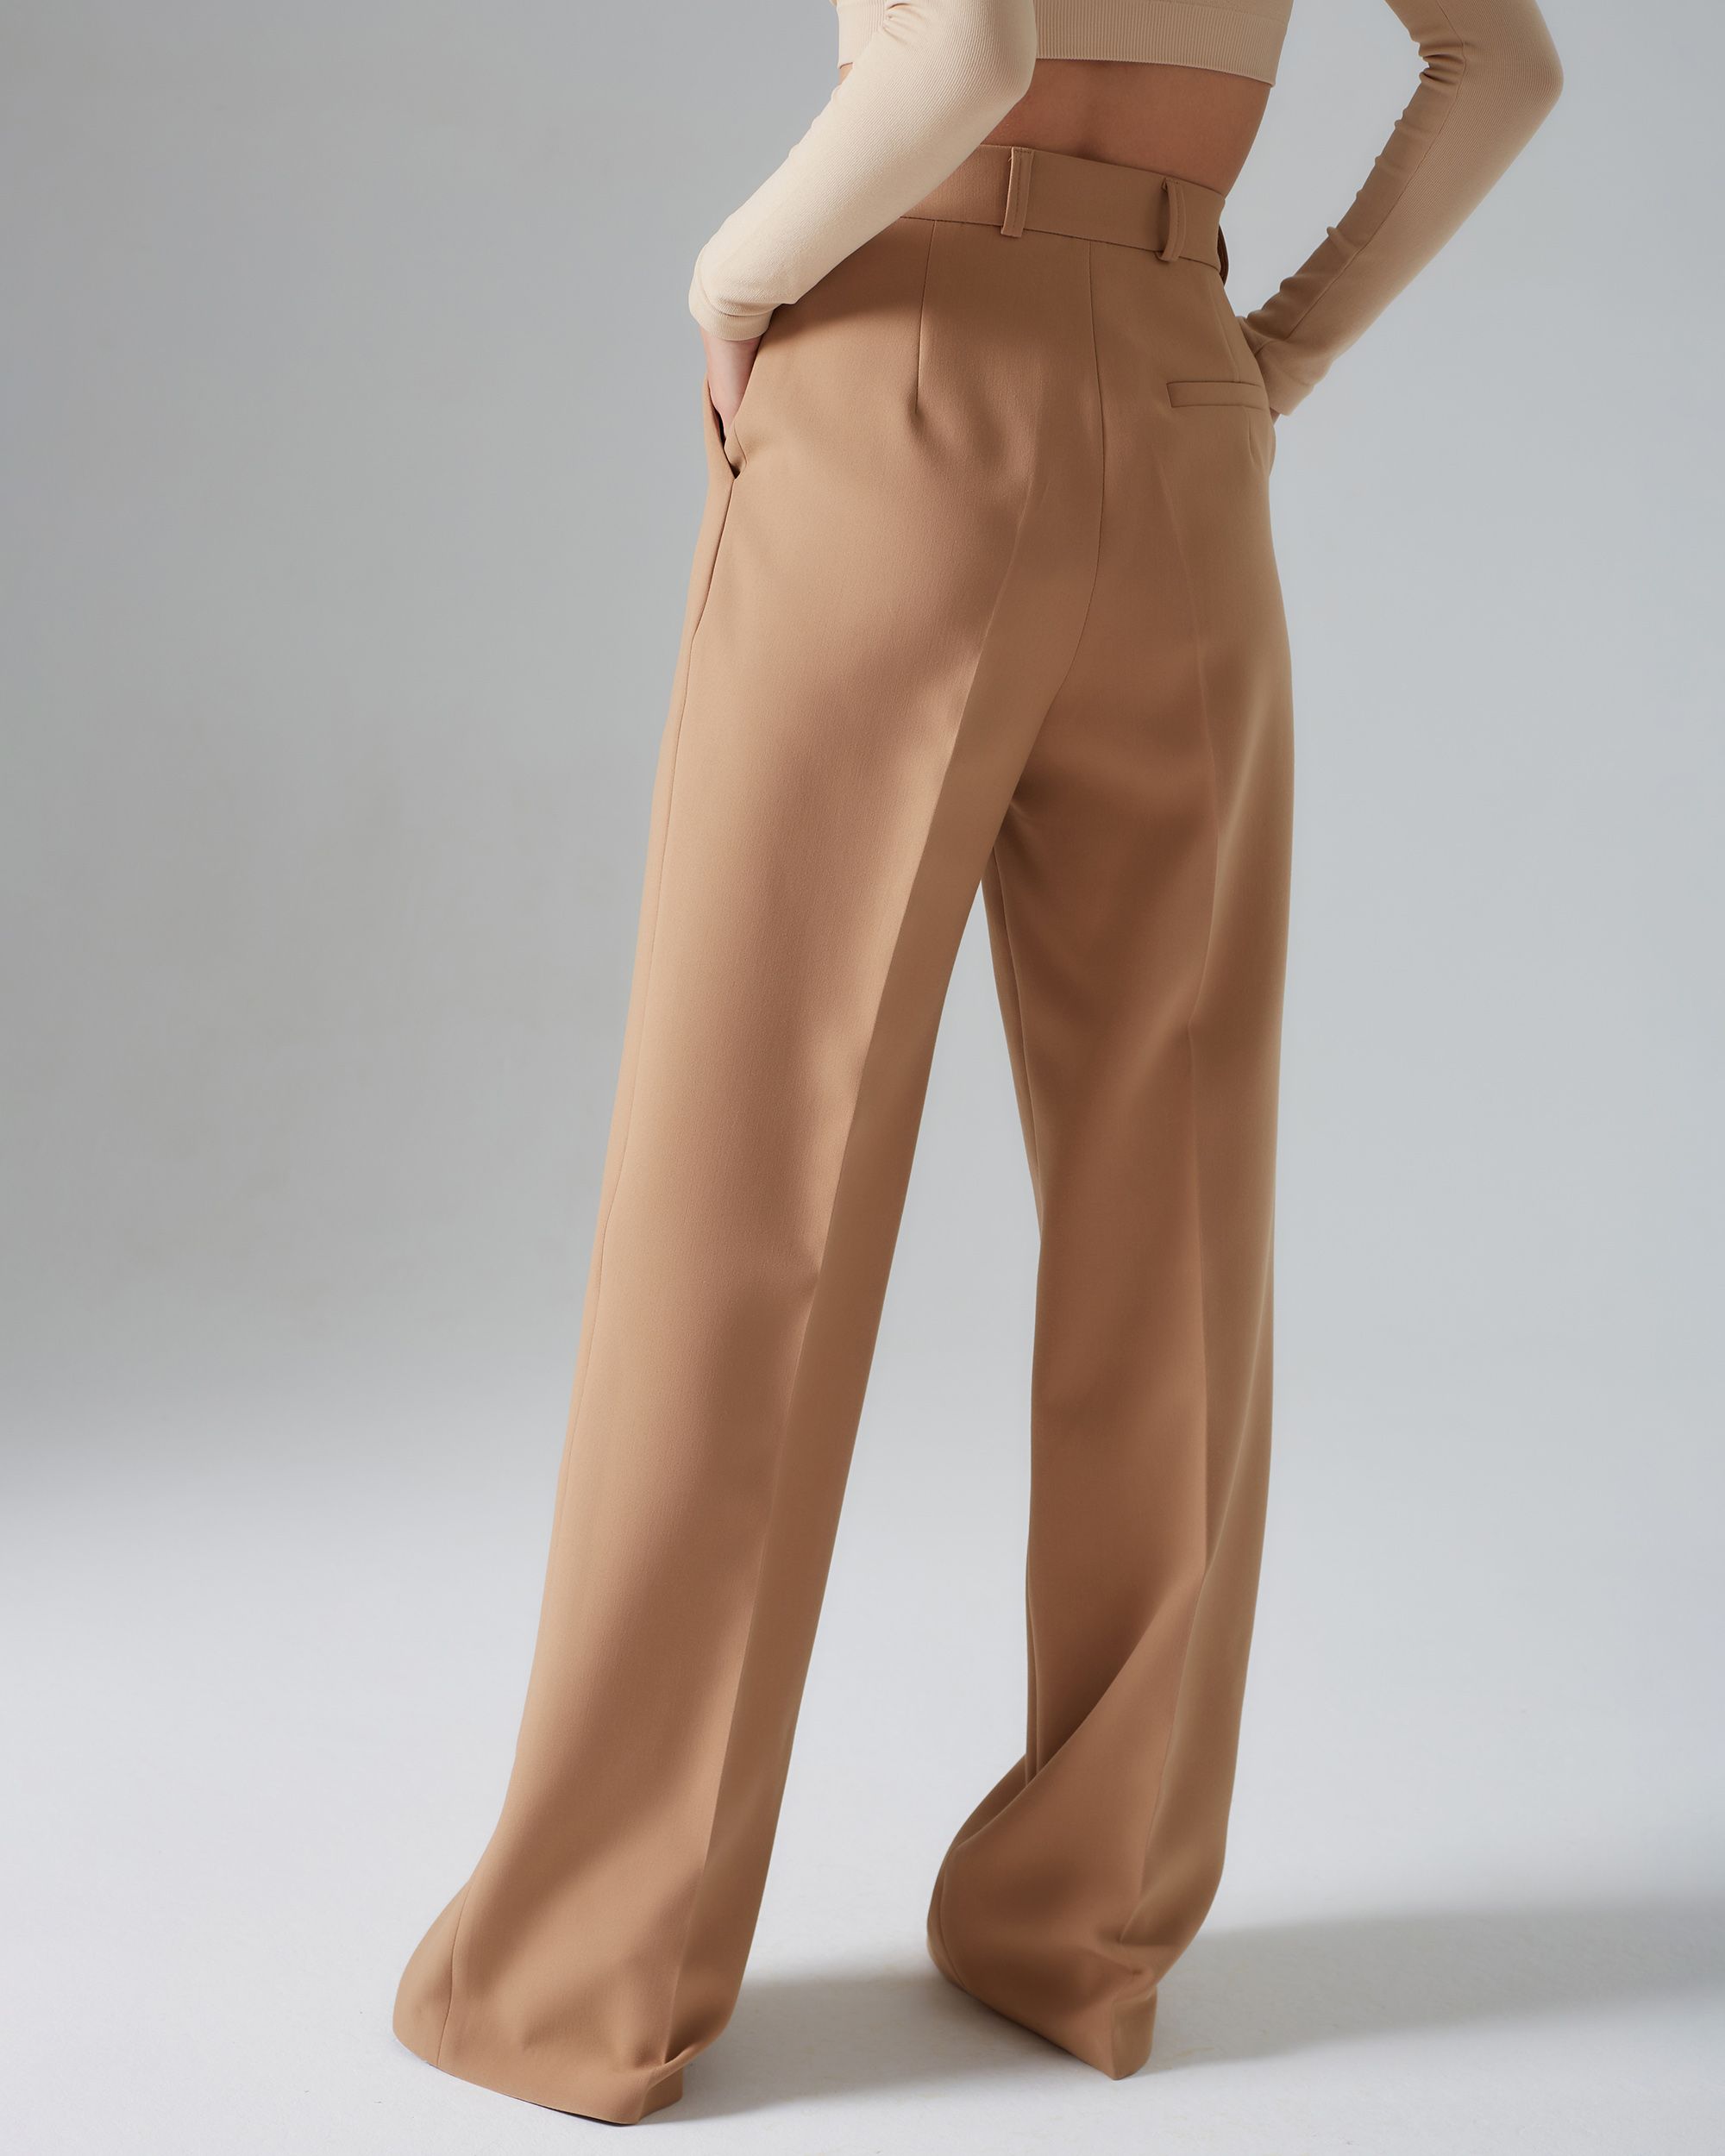 бежевые брюки женские купить, купить бежевые брюки женские прямые, брюки бежевого цвета женские